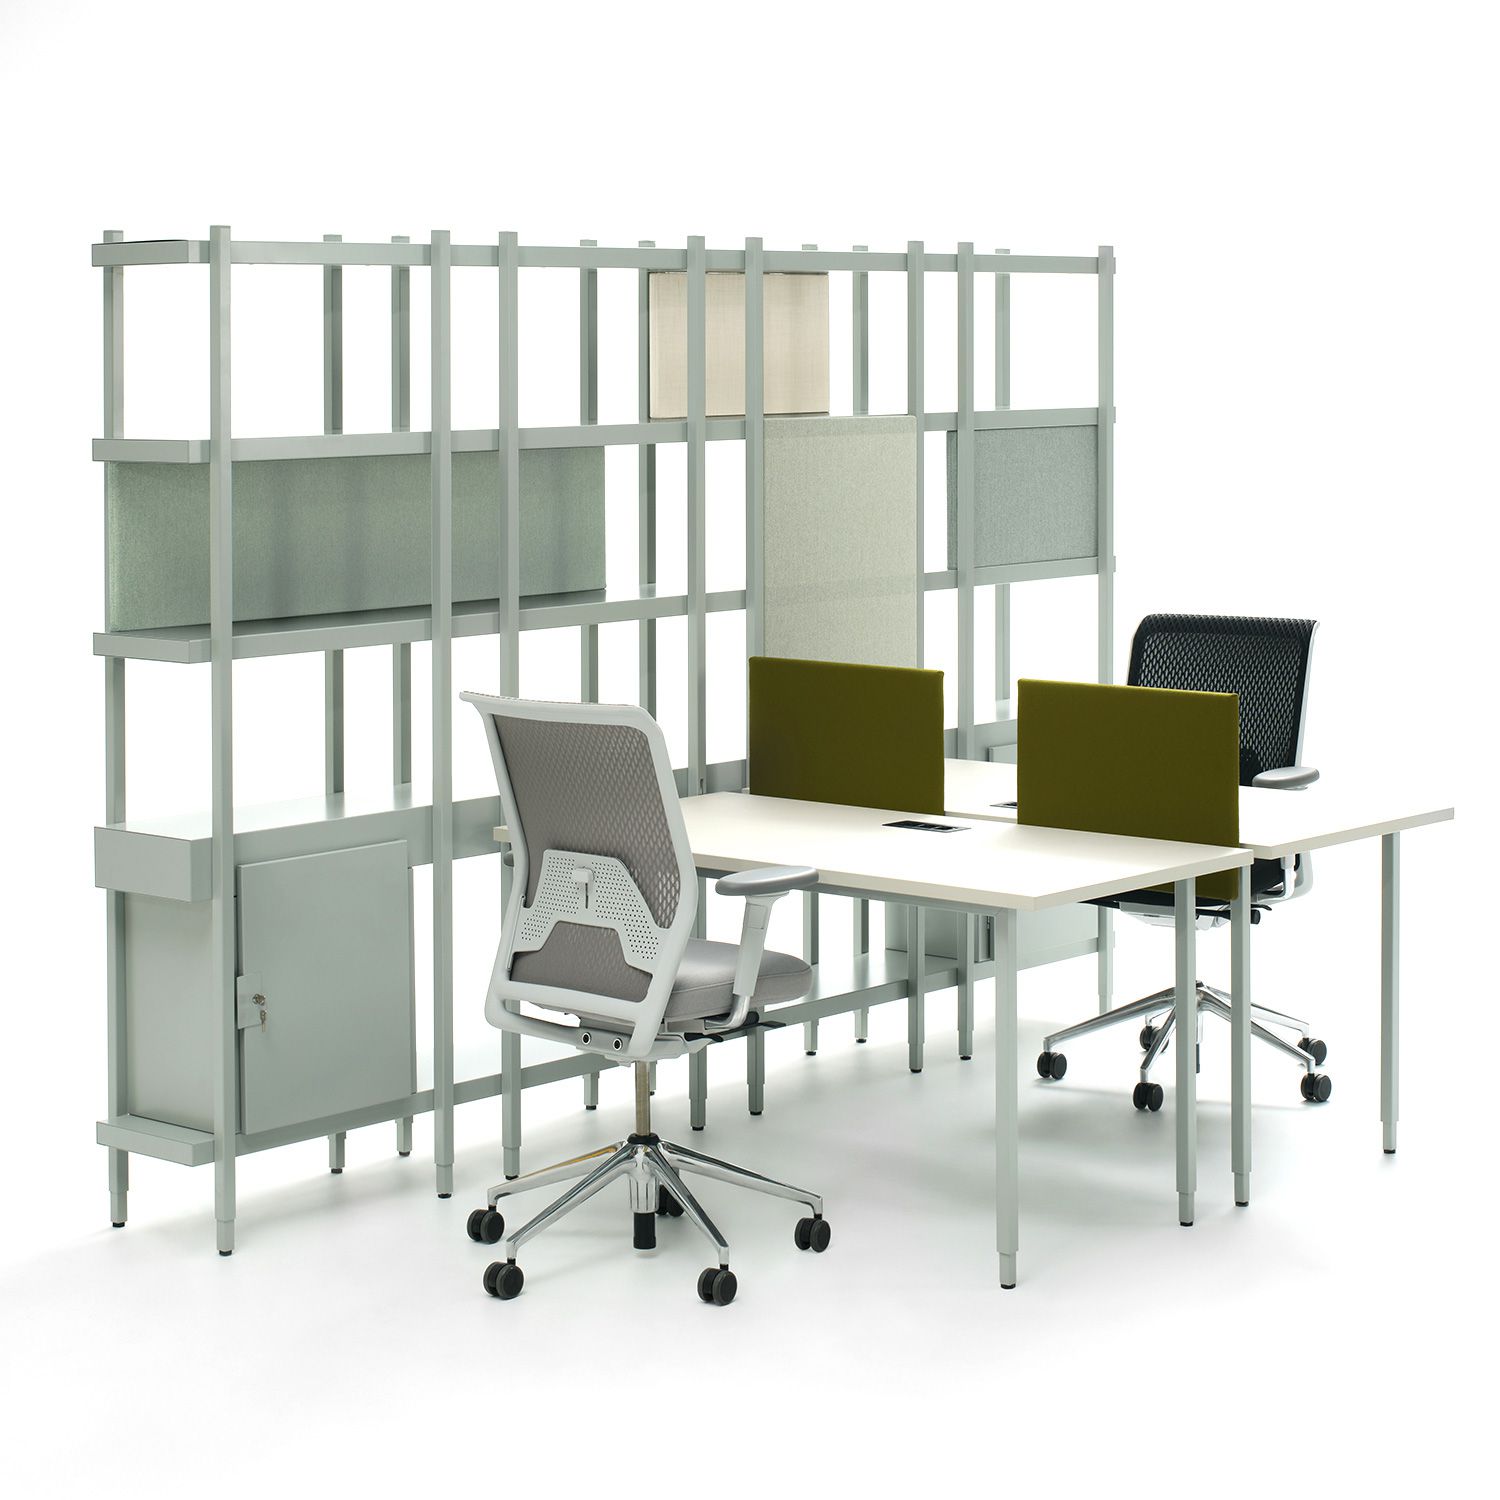 spaces dedicated desk